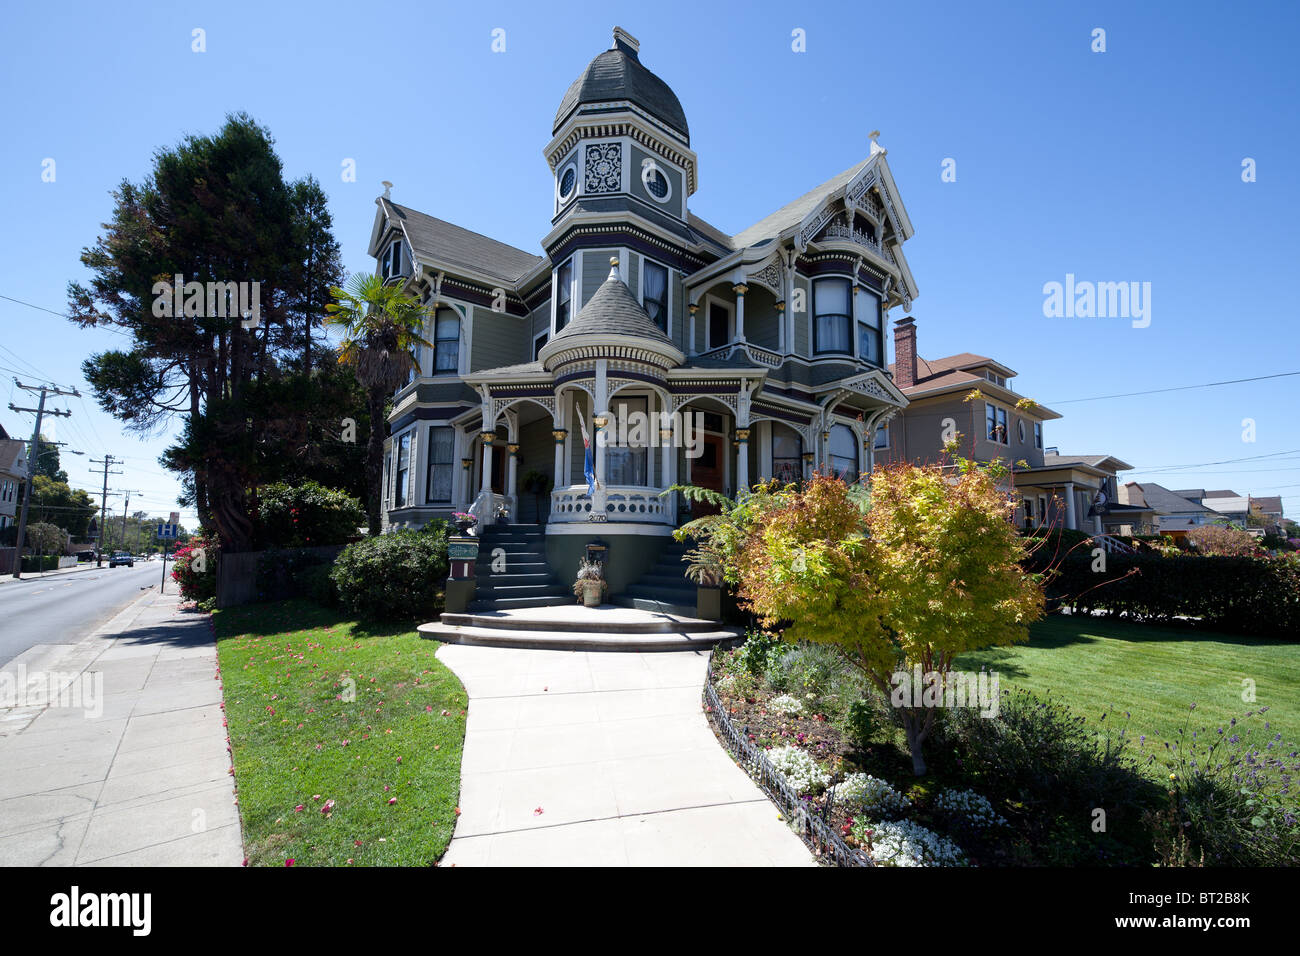 Viktorianische Häuser in Alameda, Kalifornien. Stockfoto